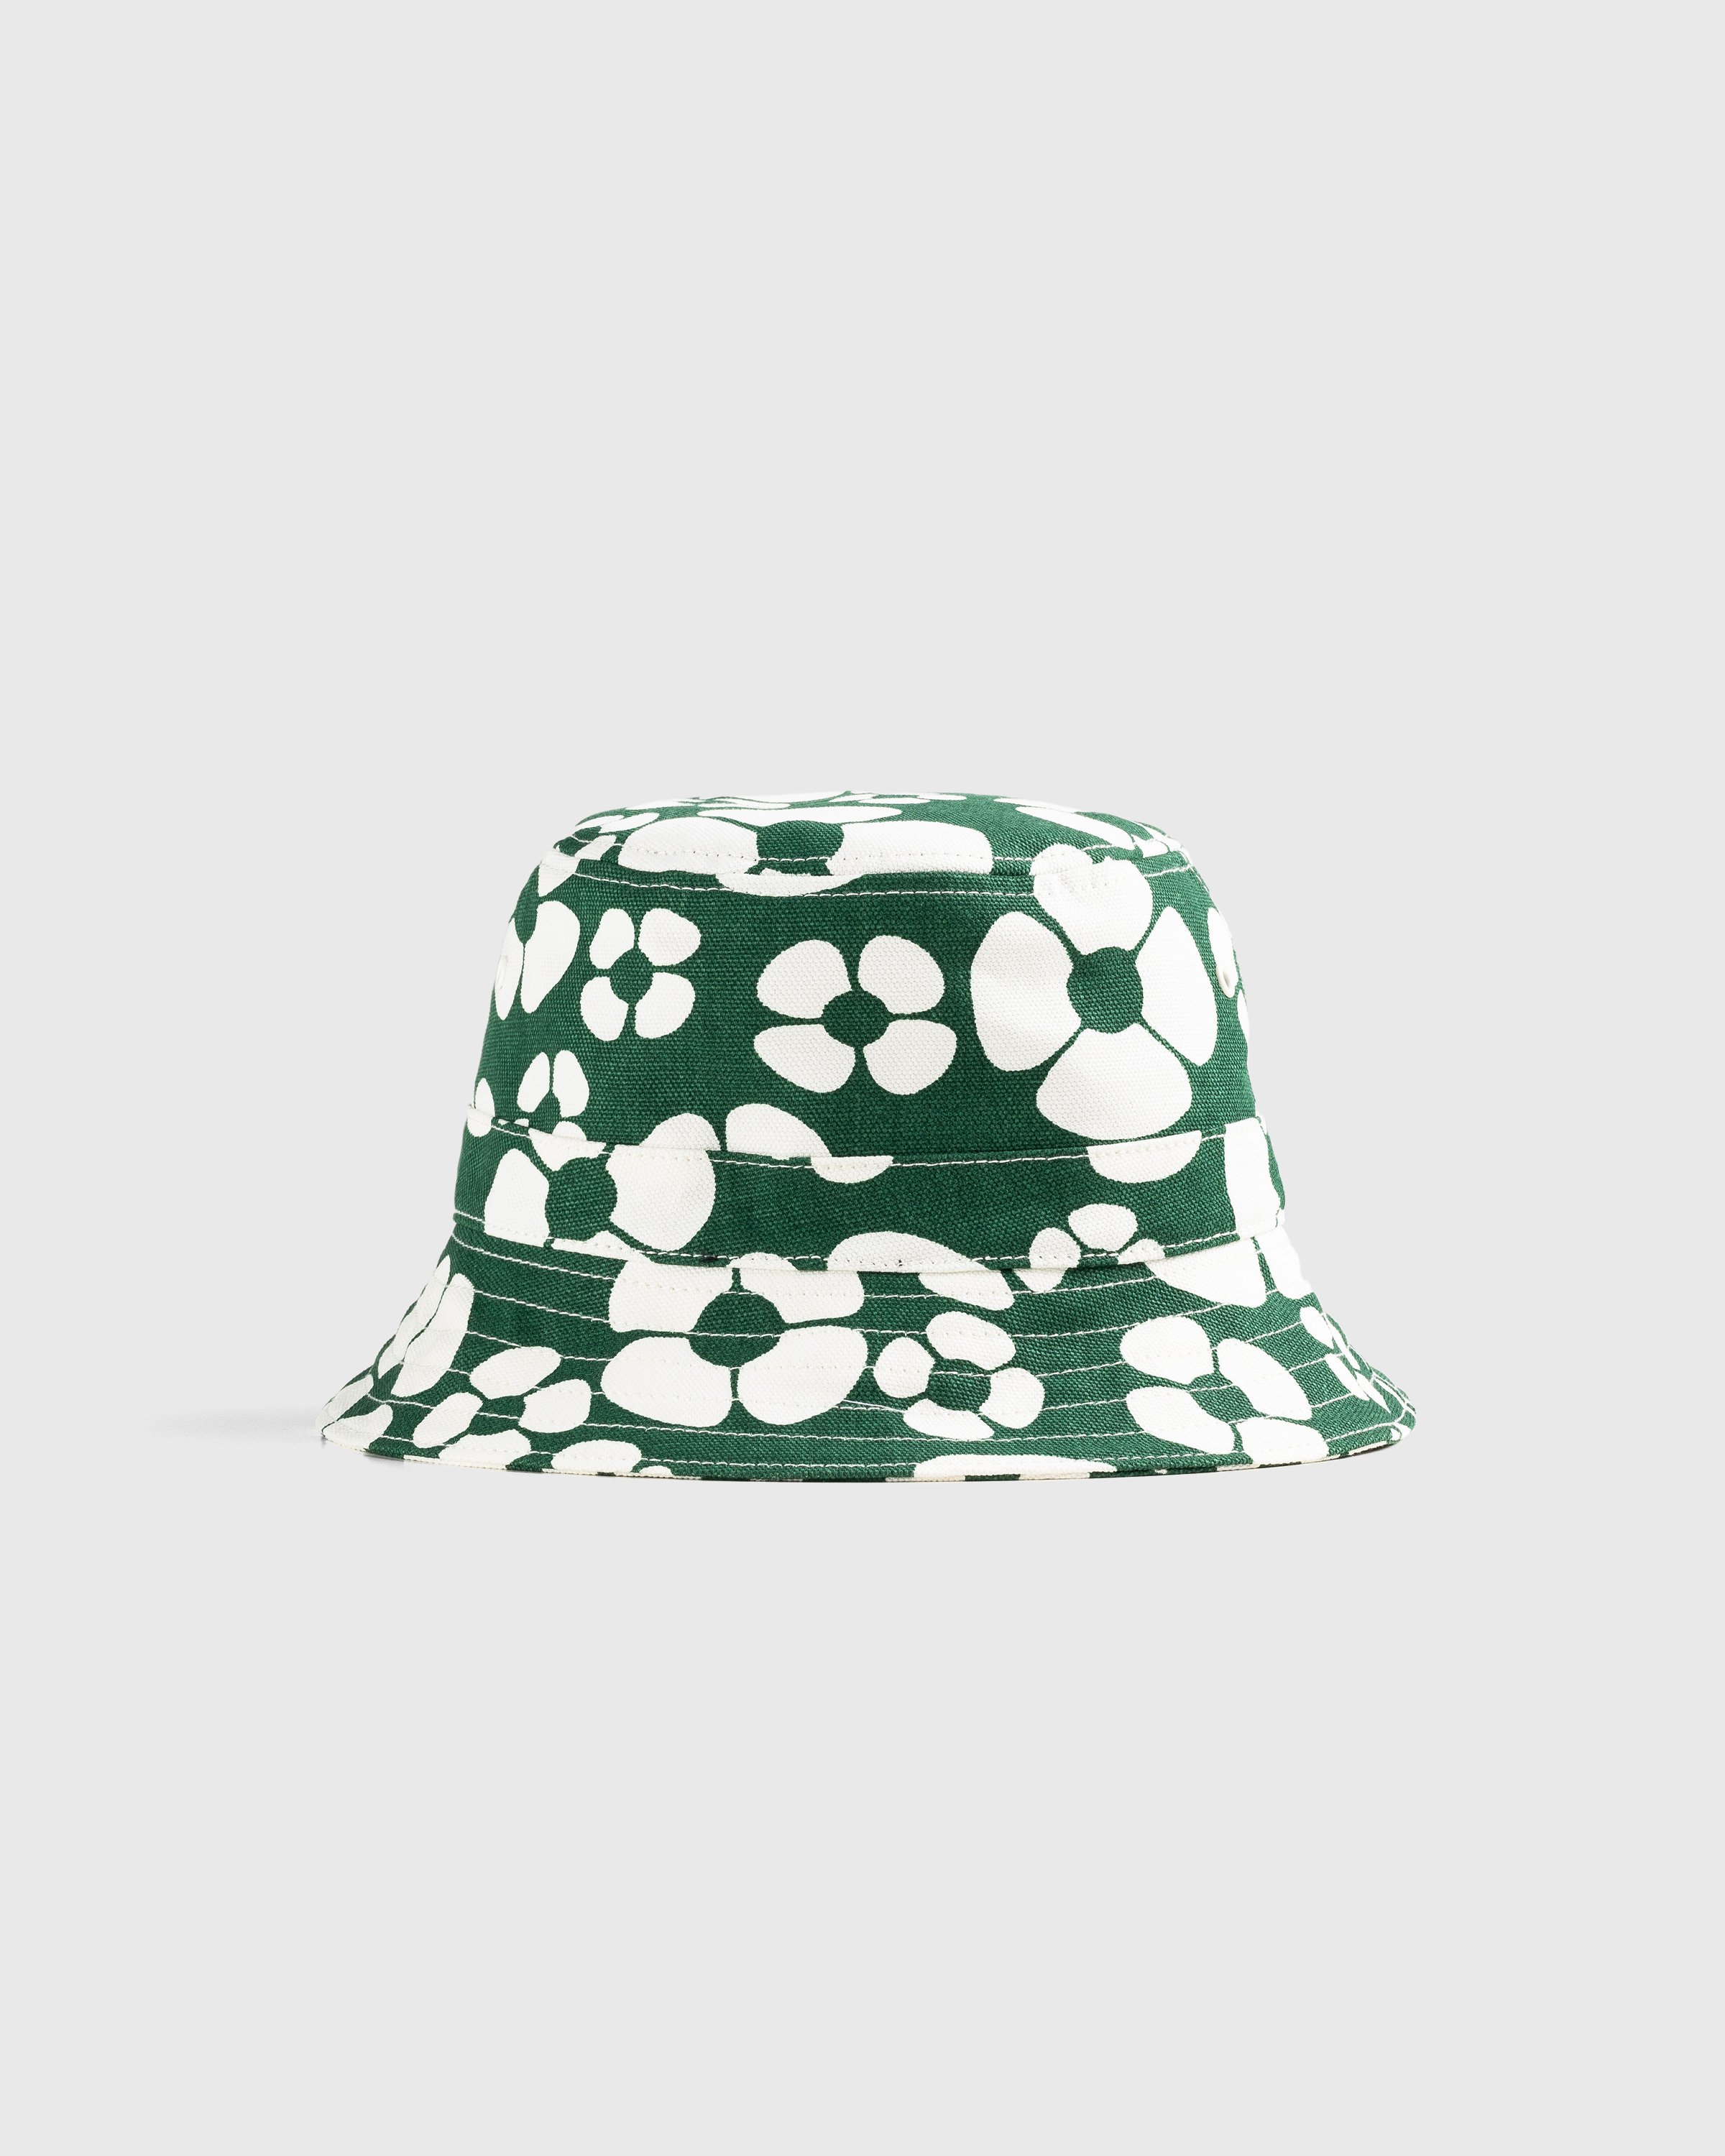 Marni x Carhartt WIP - Floral Bucket Hat Green - Accessories - Green - Image 2